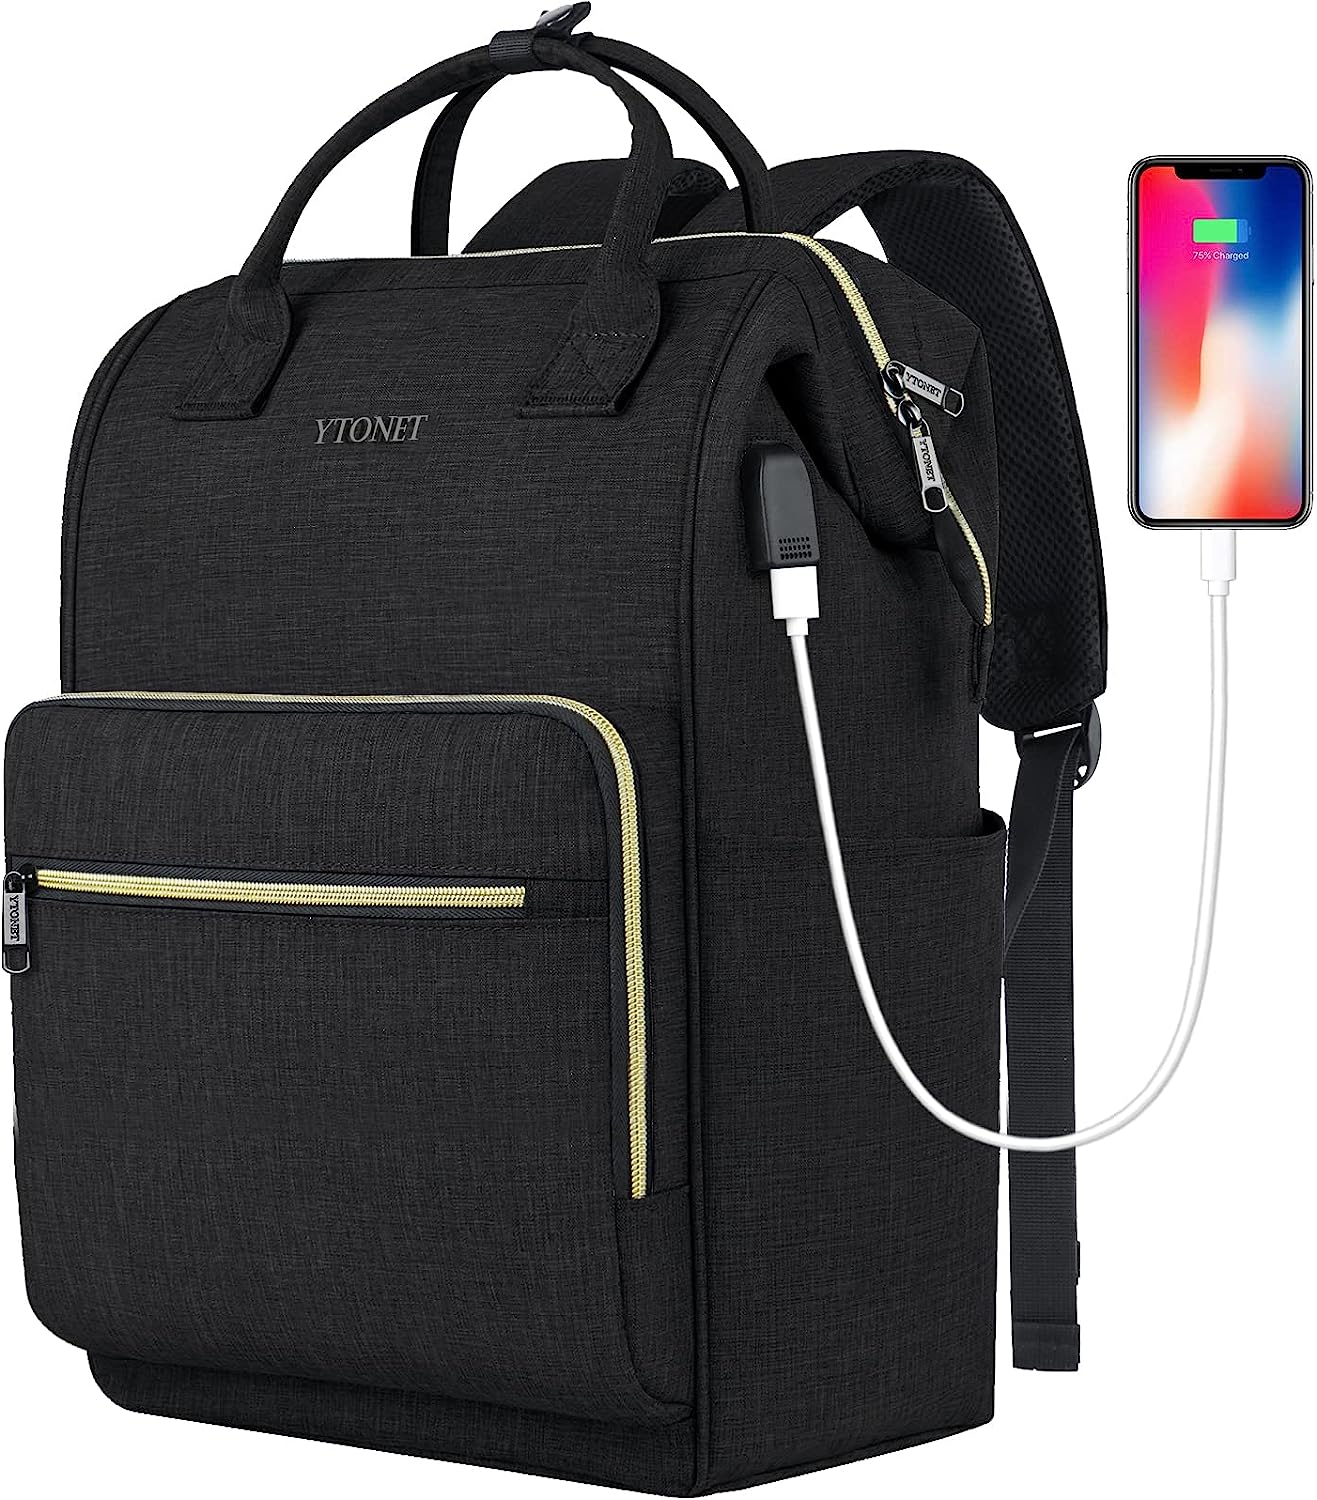 Ytonet 15 Laptop Backpack for Women, Anti-Theft [...]